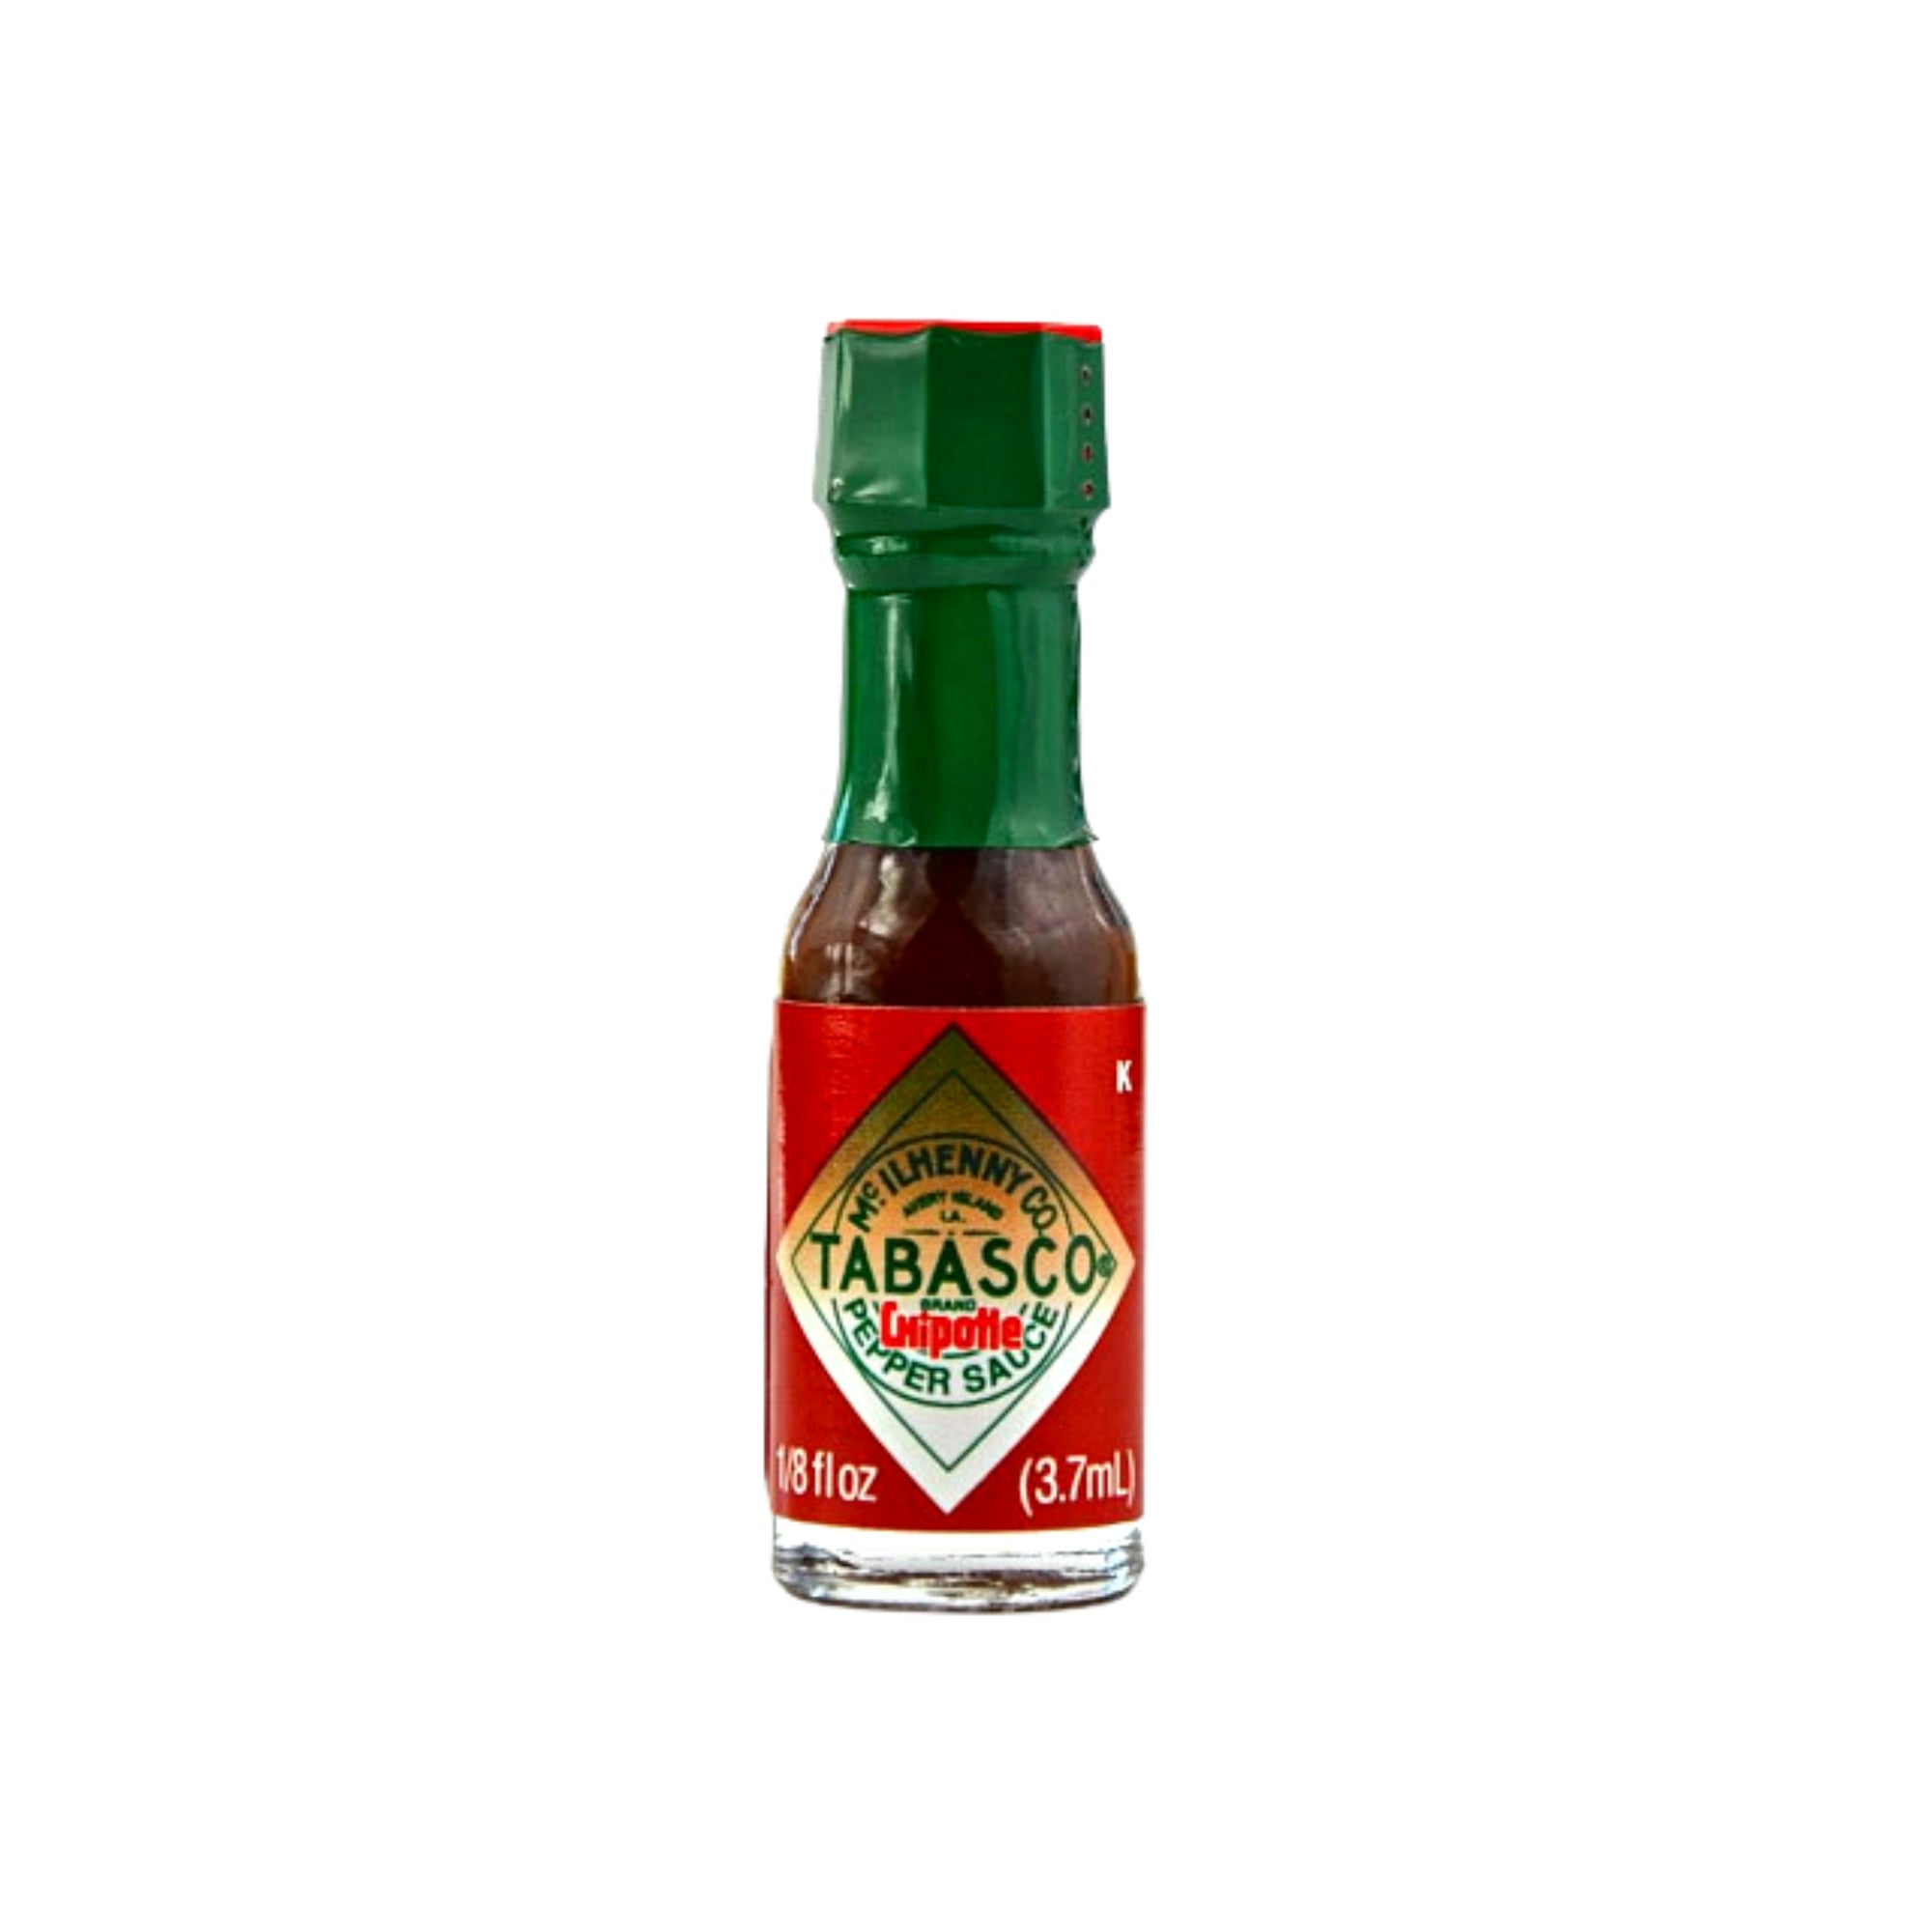 Tabasco Chipotle Sauce 150ml.